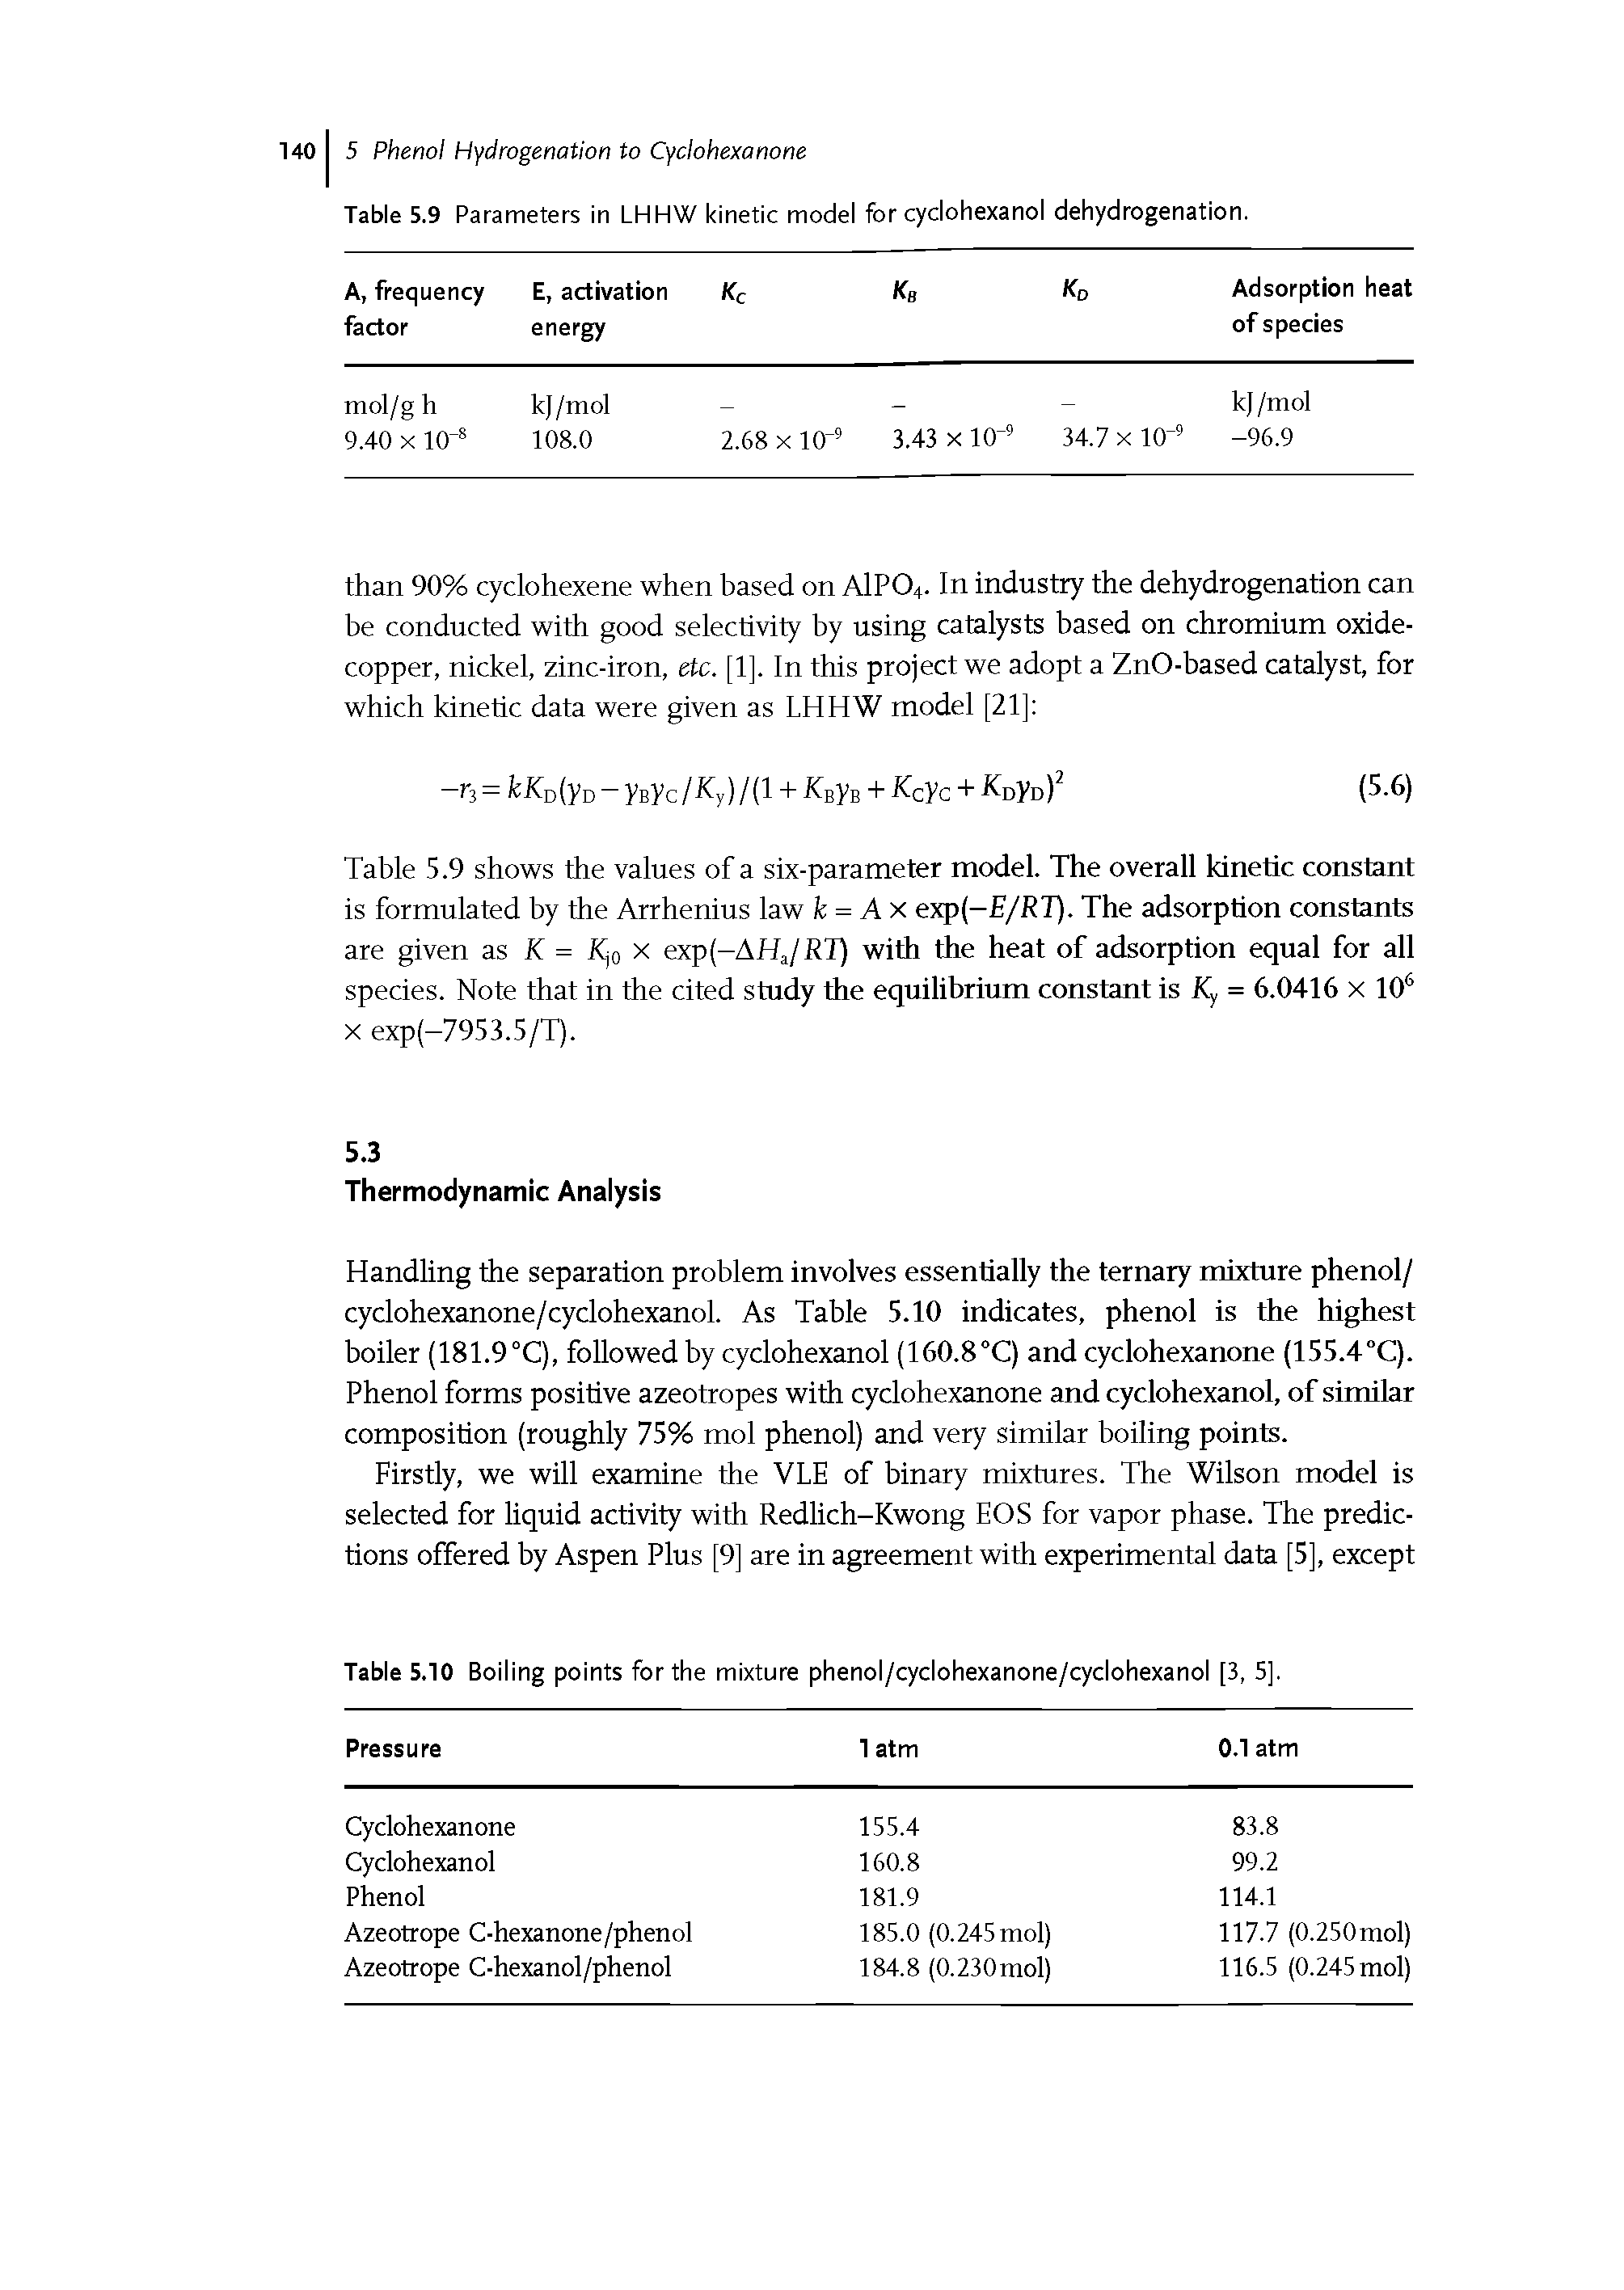 Table 5.10 Boiling points for the mixture phenol/cyclohexanone/cyclohexanol [3, 5].